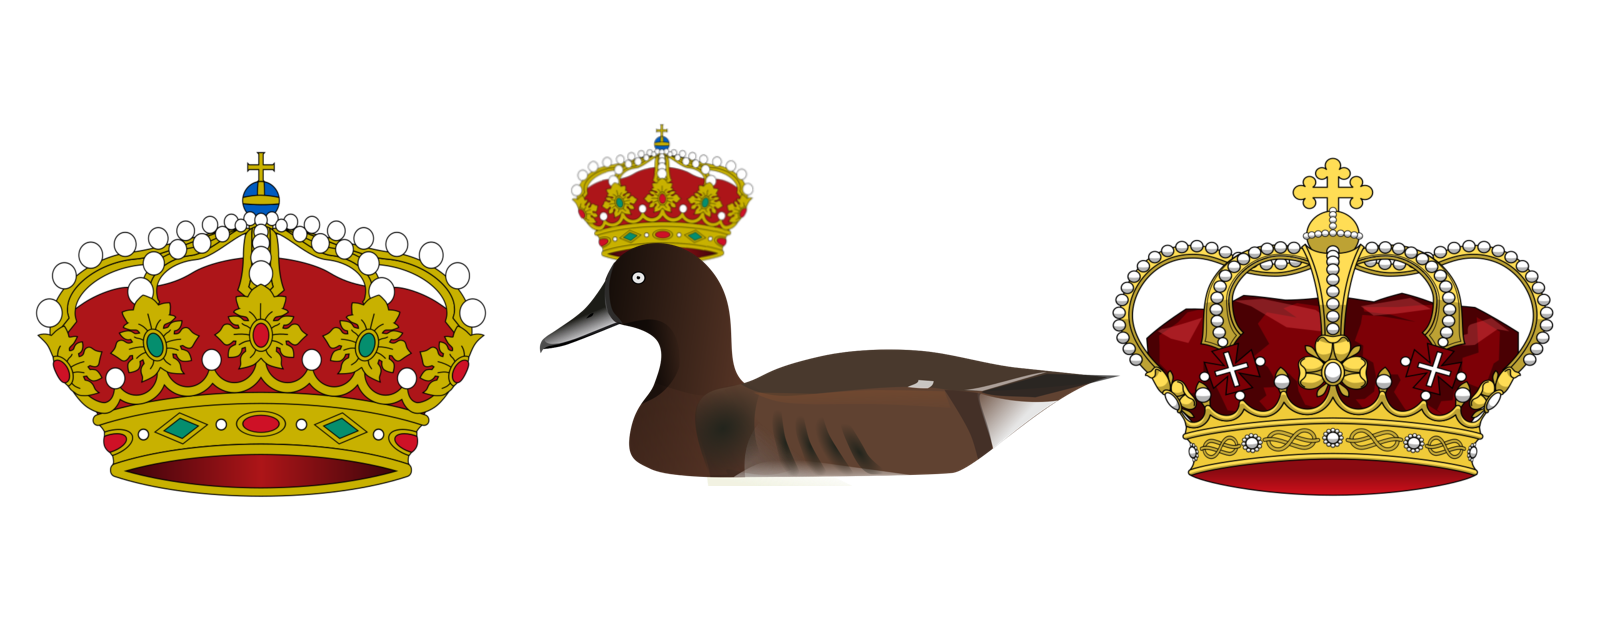 King Crown PNG Cutout